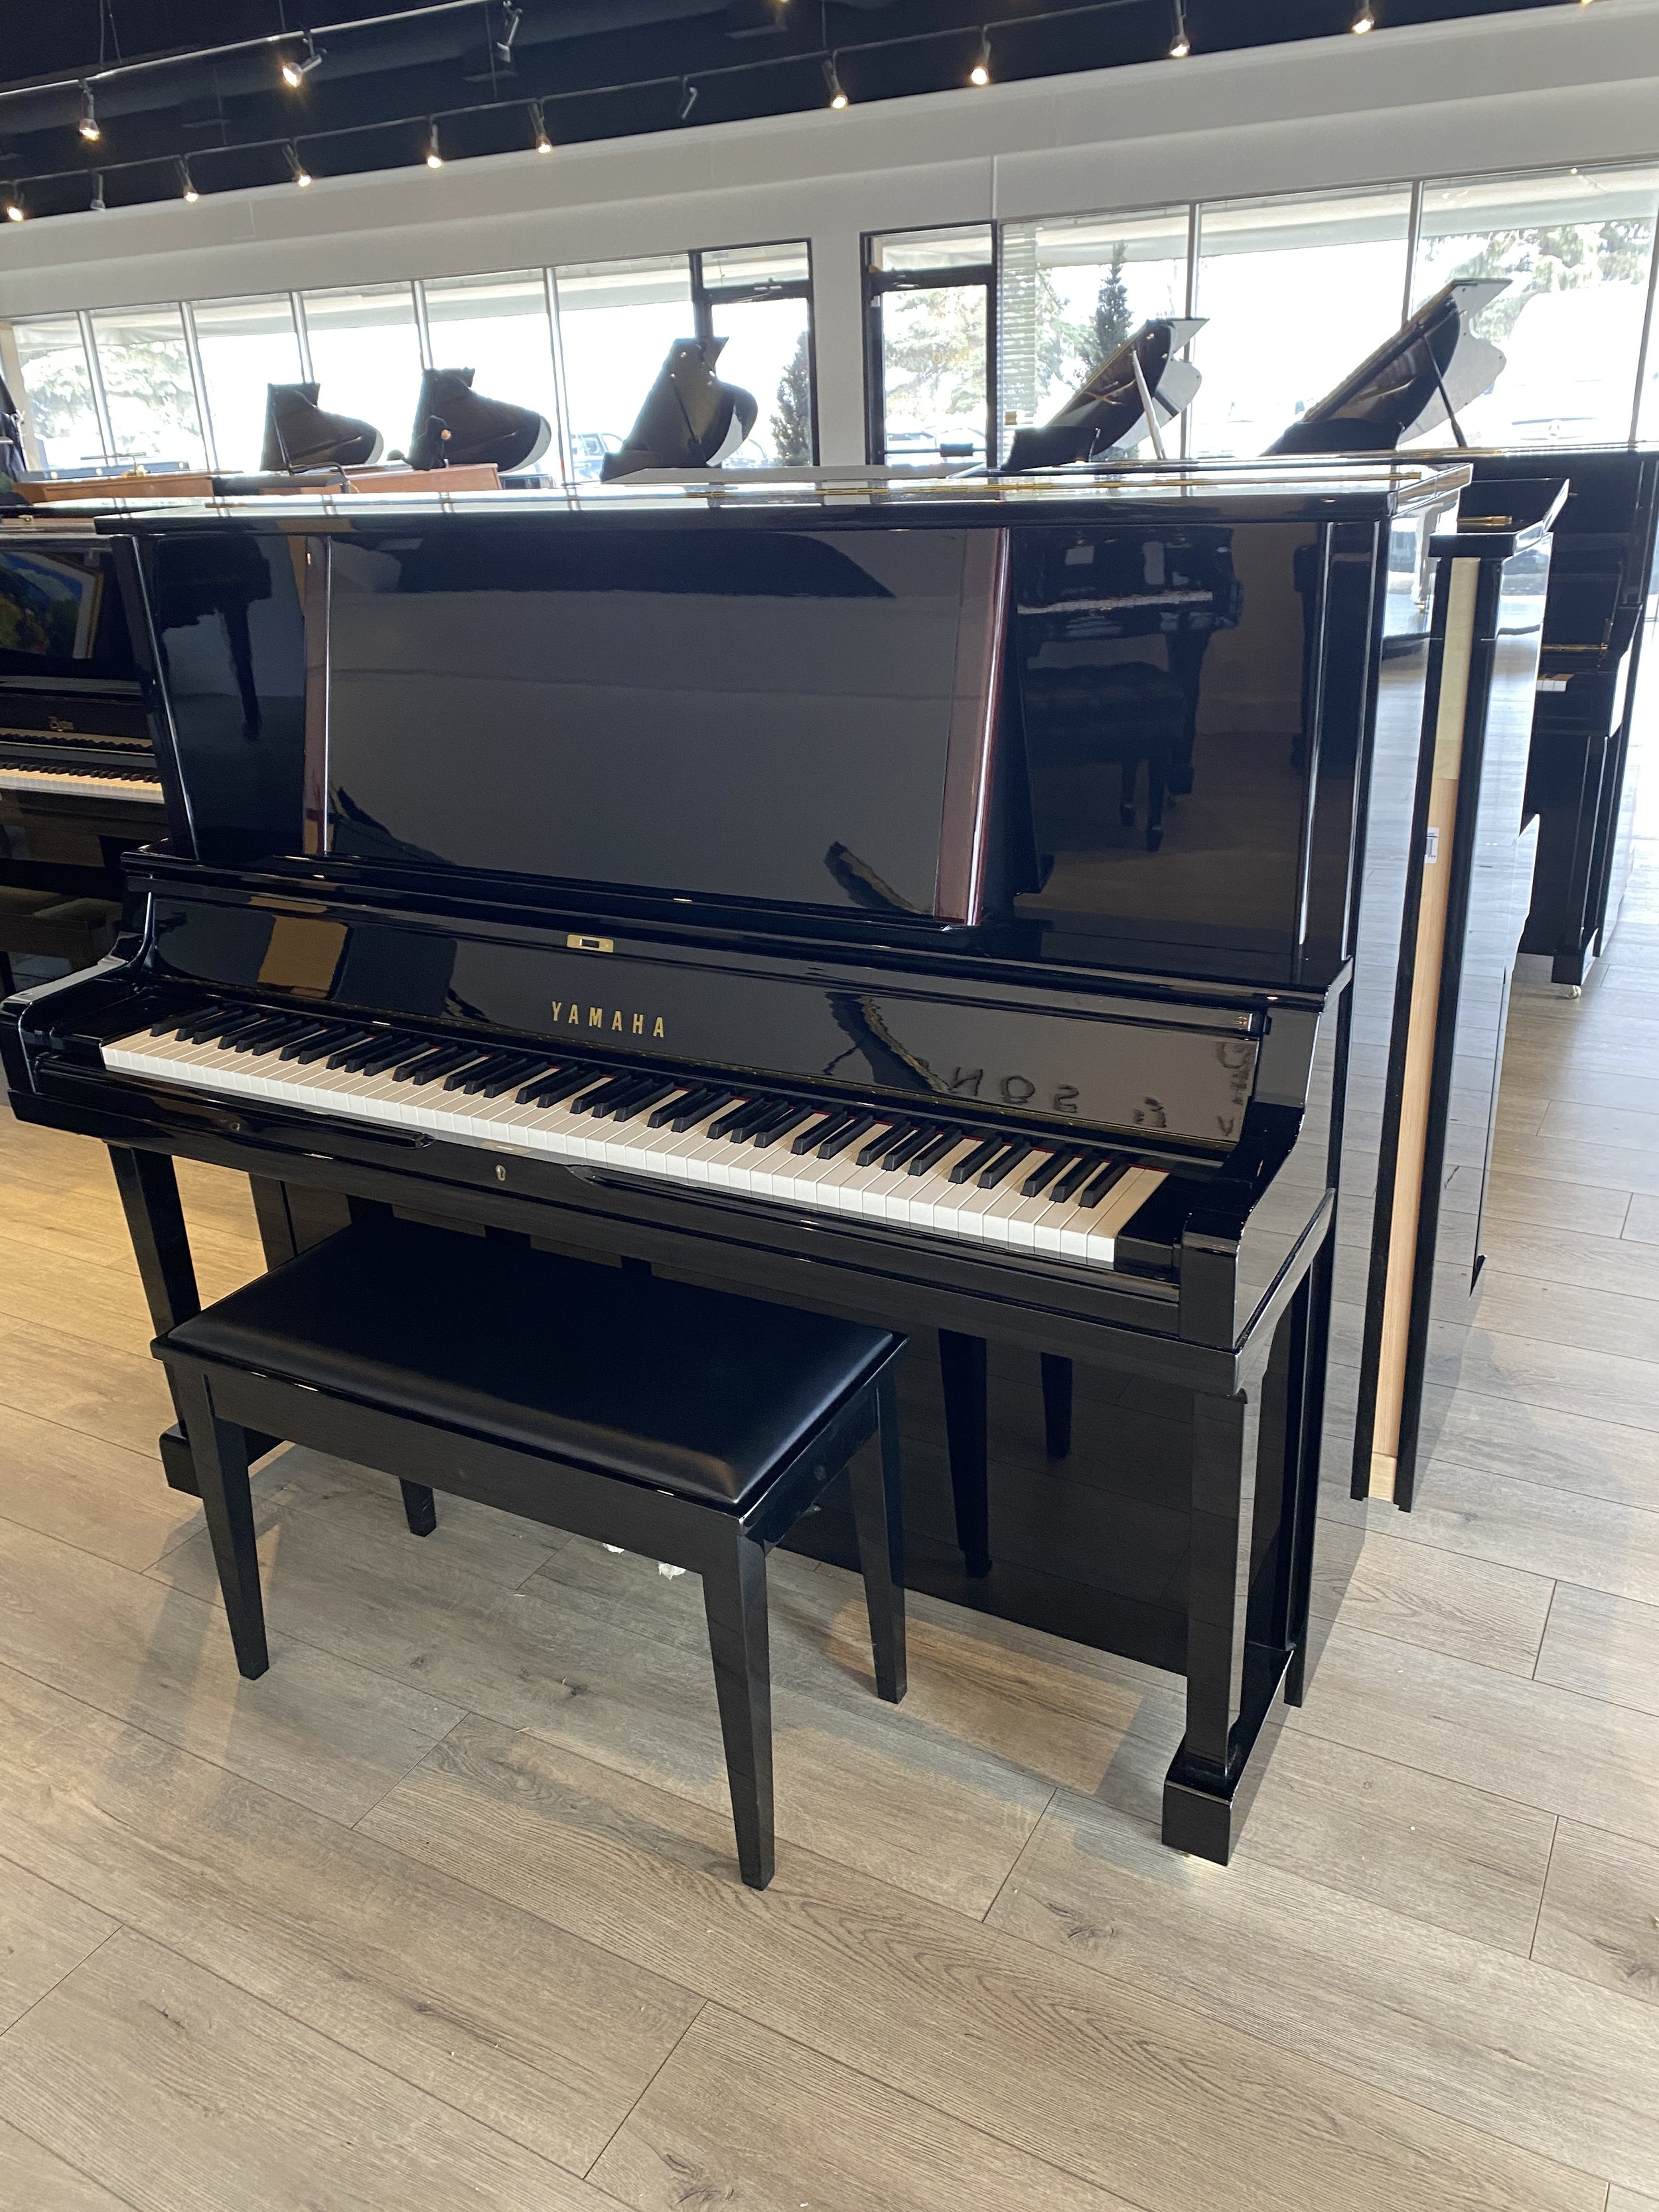 Yamaha YUS-5 52" Upright Piano